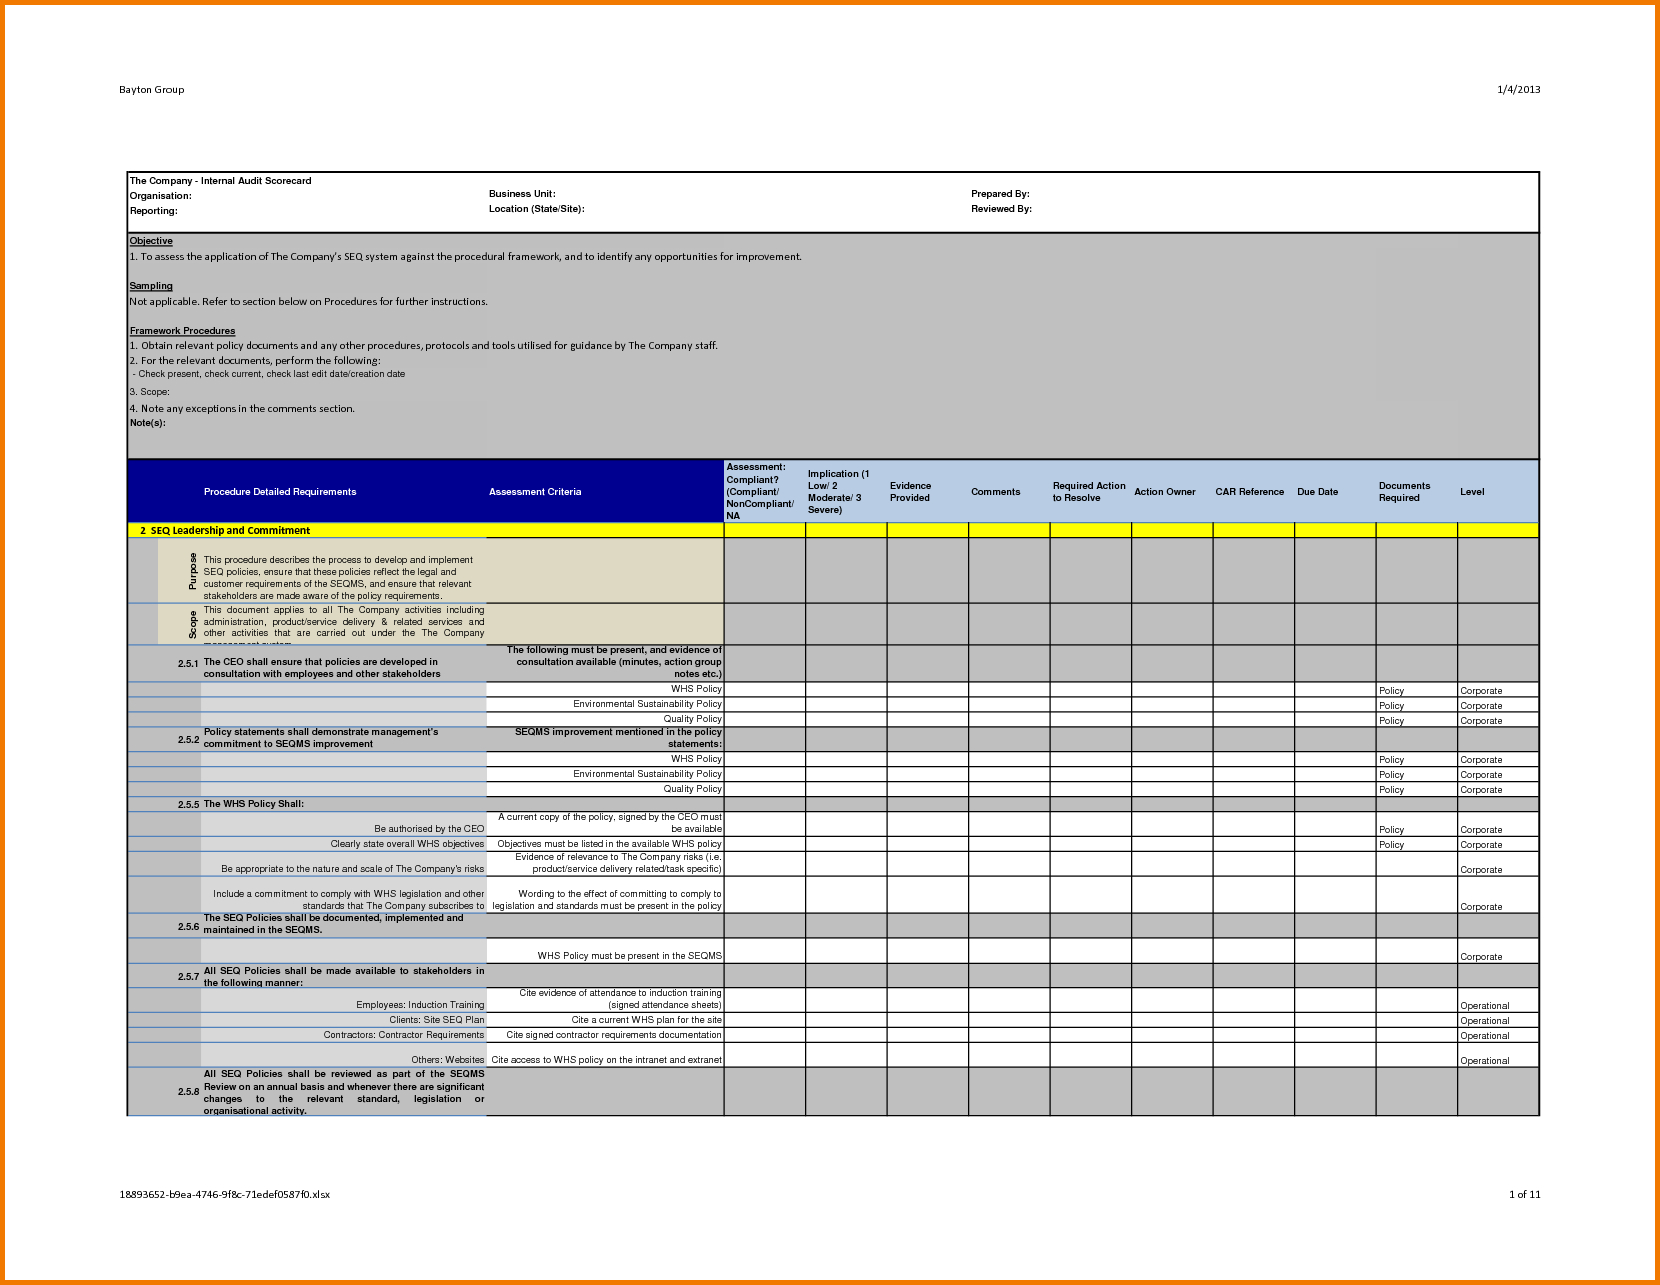 Company Internal Auditing Activity Checklist Professional Regarding Iso 9001 Internal Audit Report Template